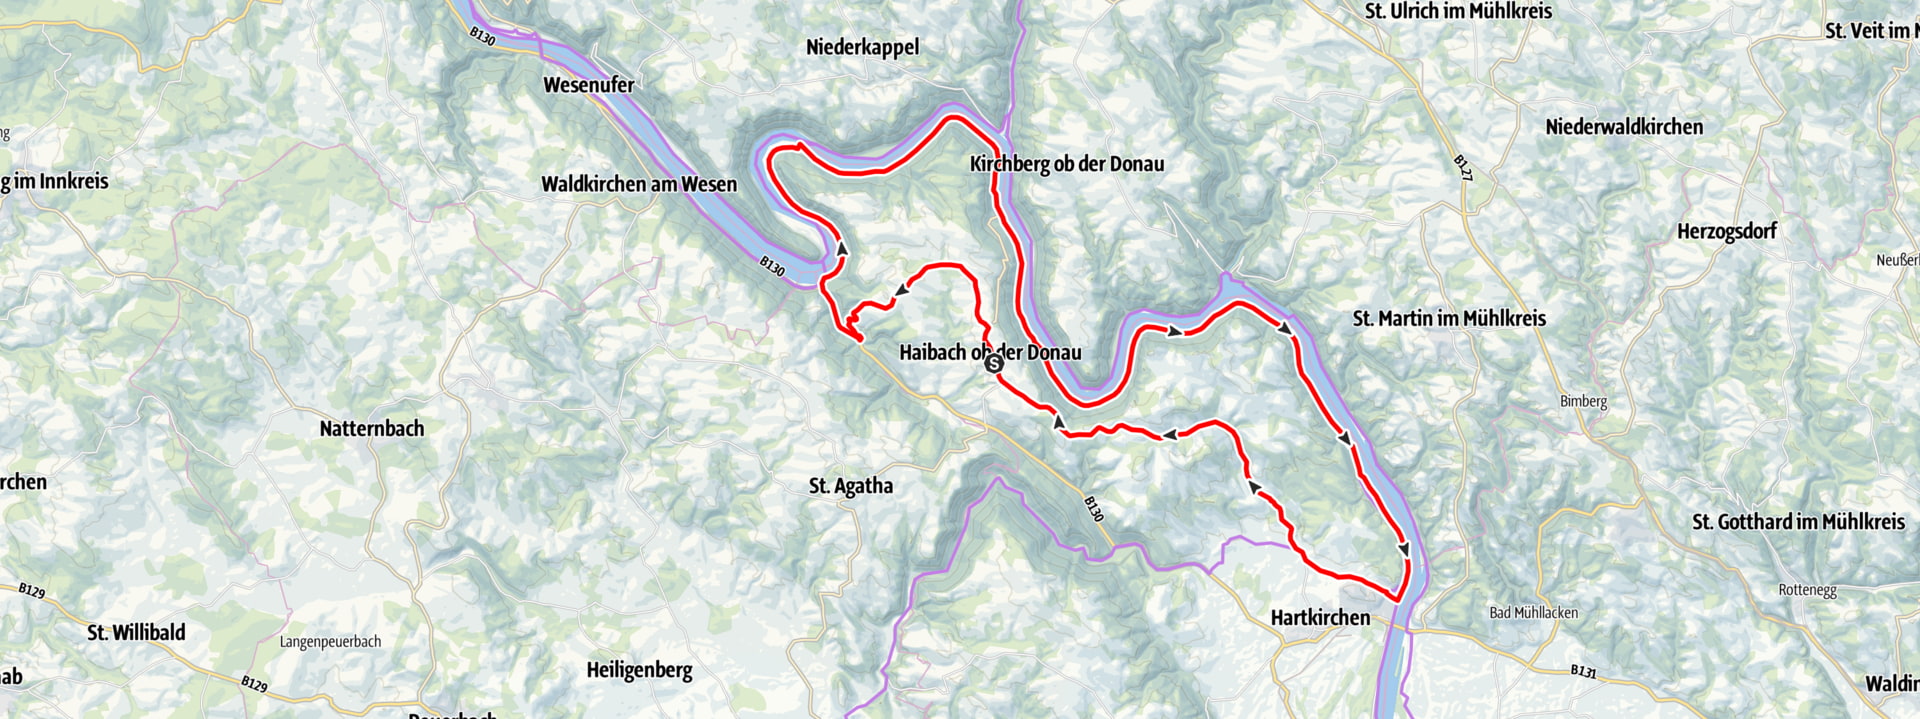 Donauschlingenrundweg Karte